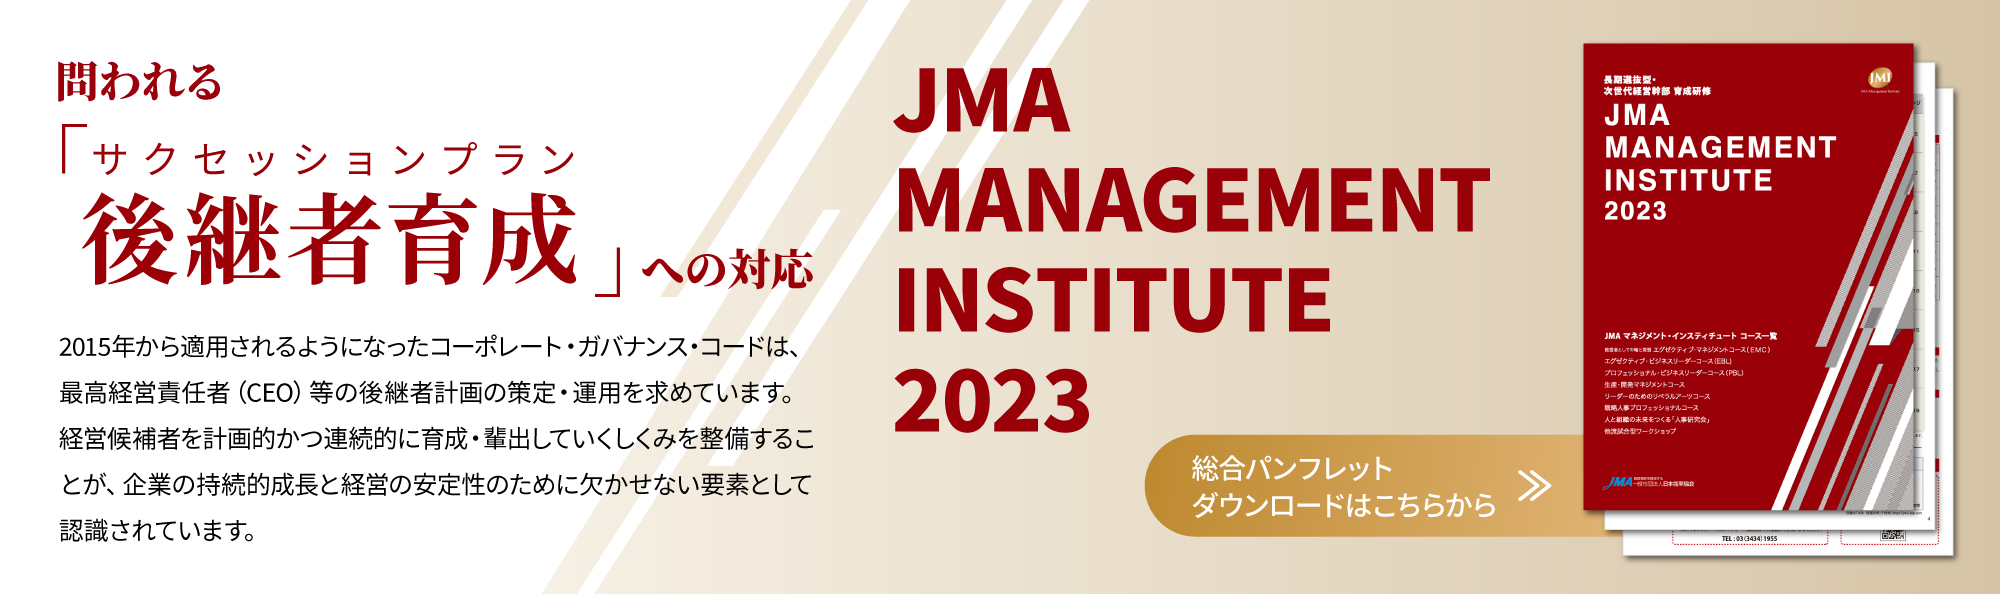 JMA Management Institute 2023 総合パンフレットダウンロードはこちらから　